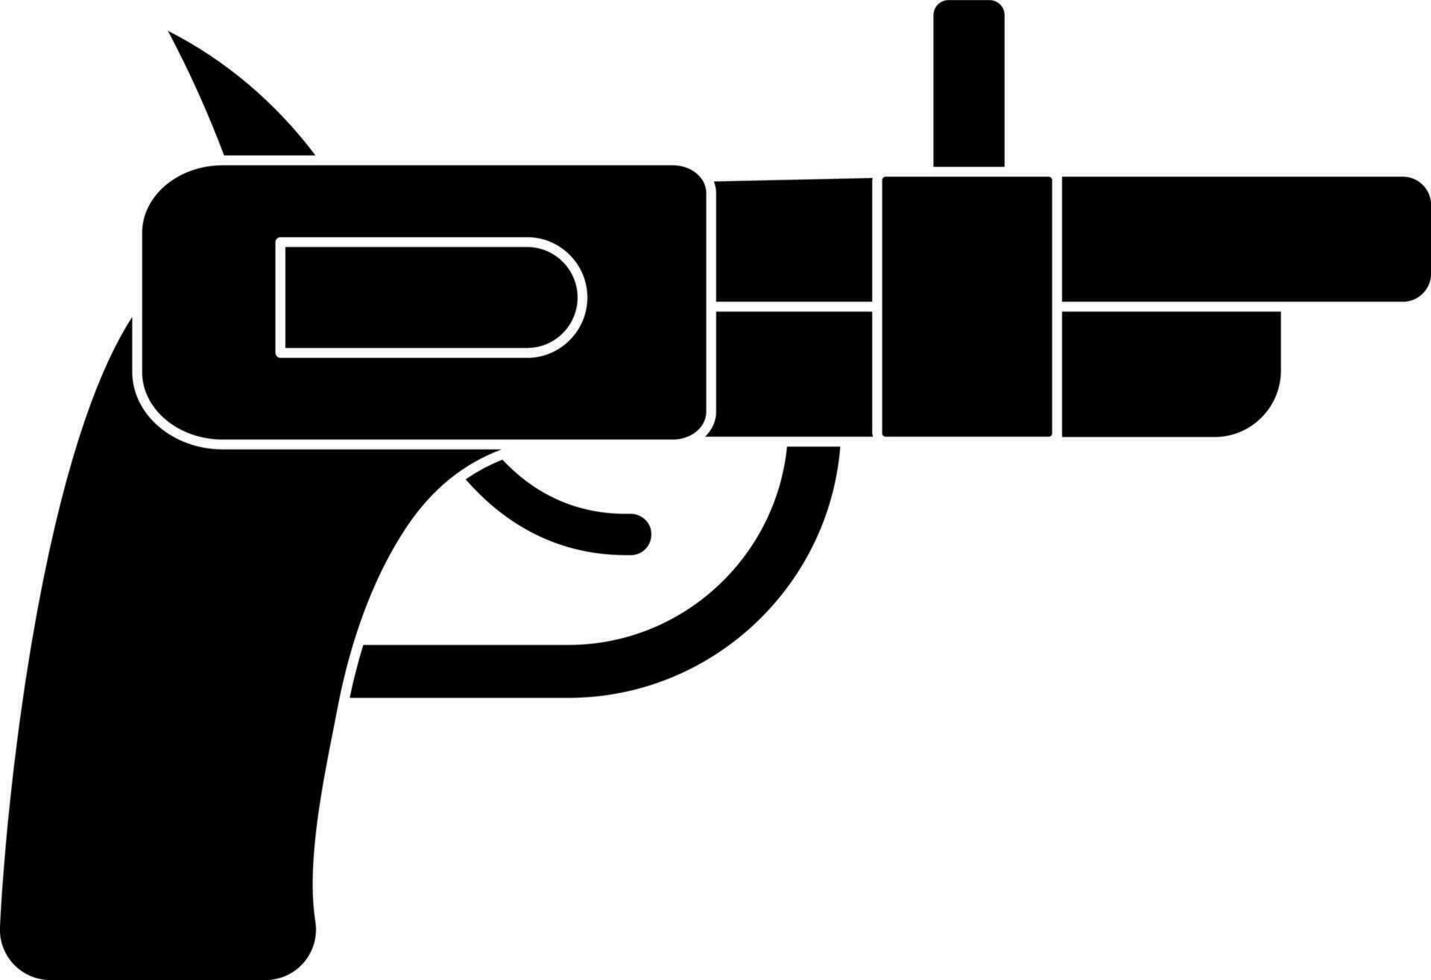 Pistol Or Gun Icon In Black and White Color. vector